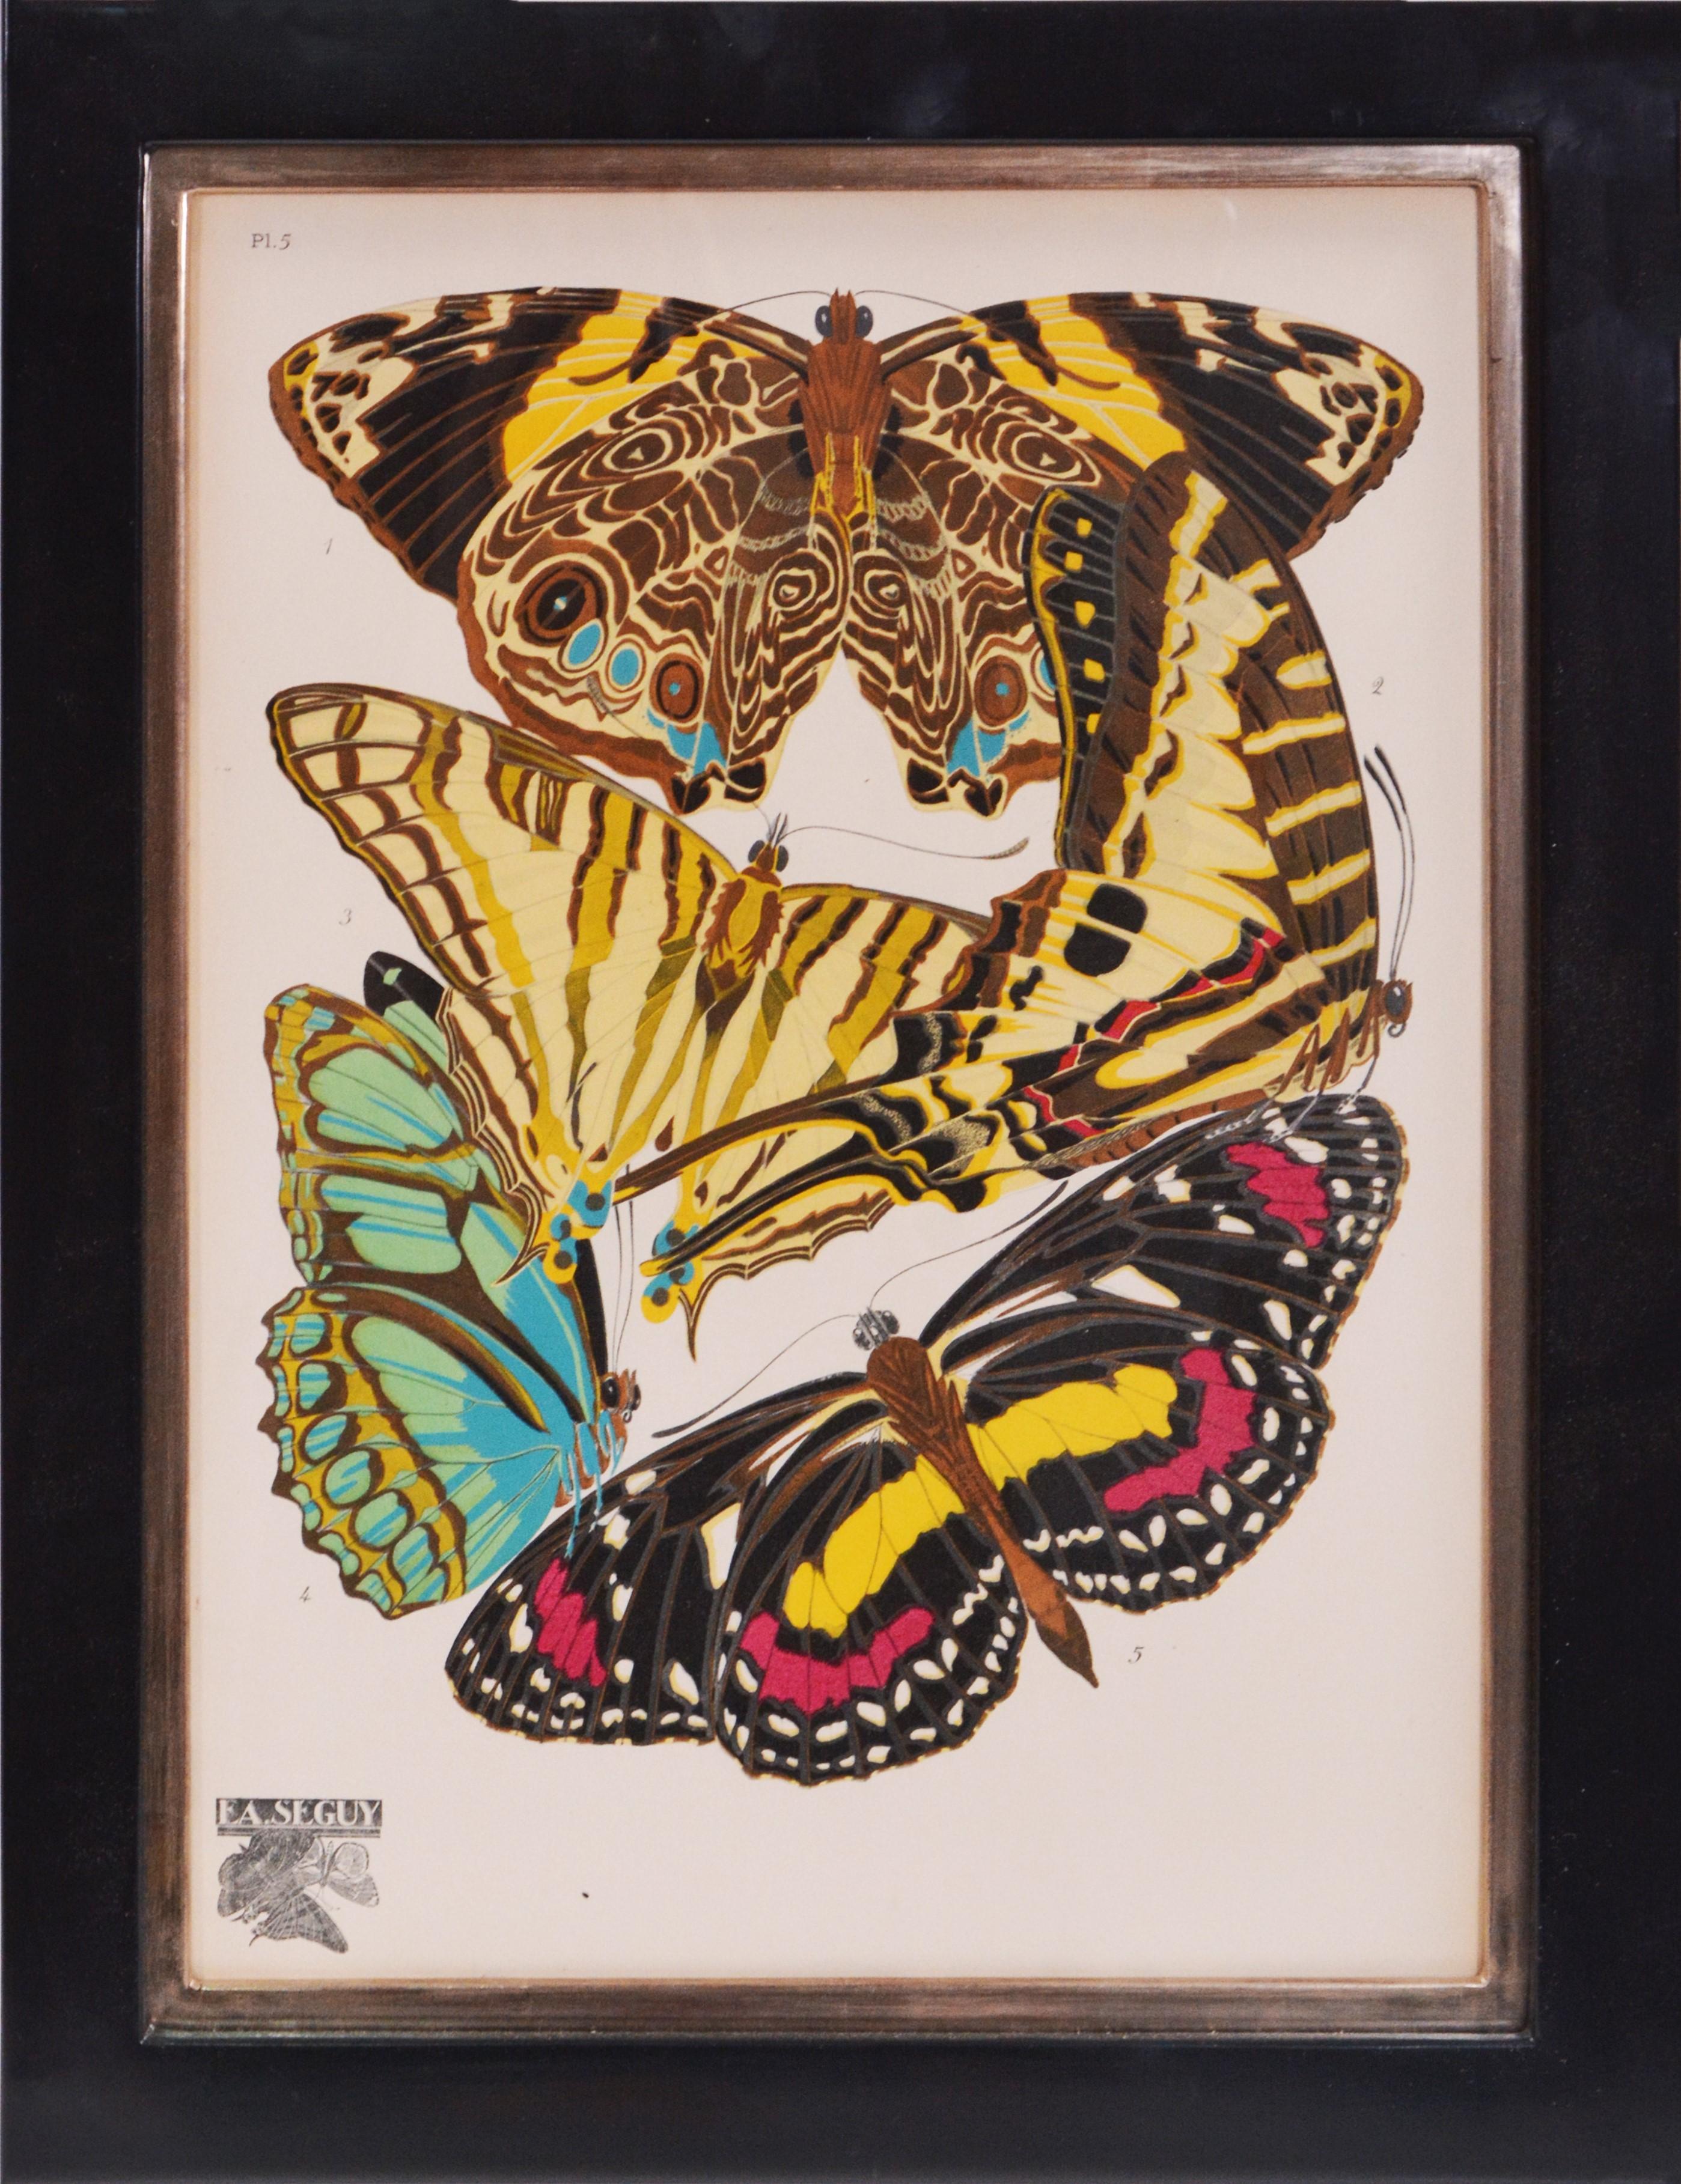 SEGUY. A Group of Six Papillons. Lithographs en pochoir. - Art Deco Print by SEGUY, E[ugene] A[lain].